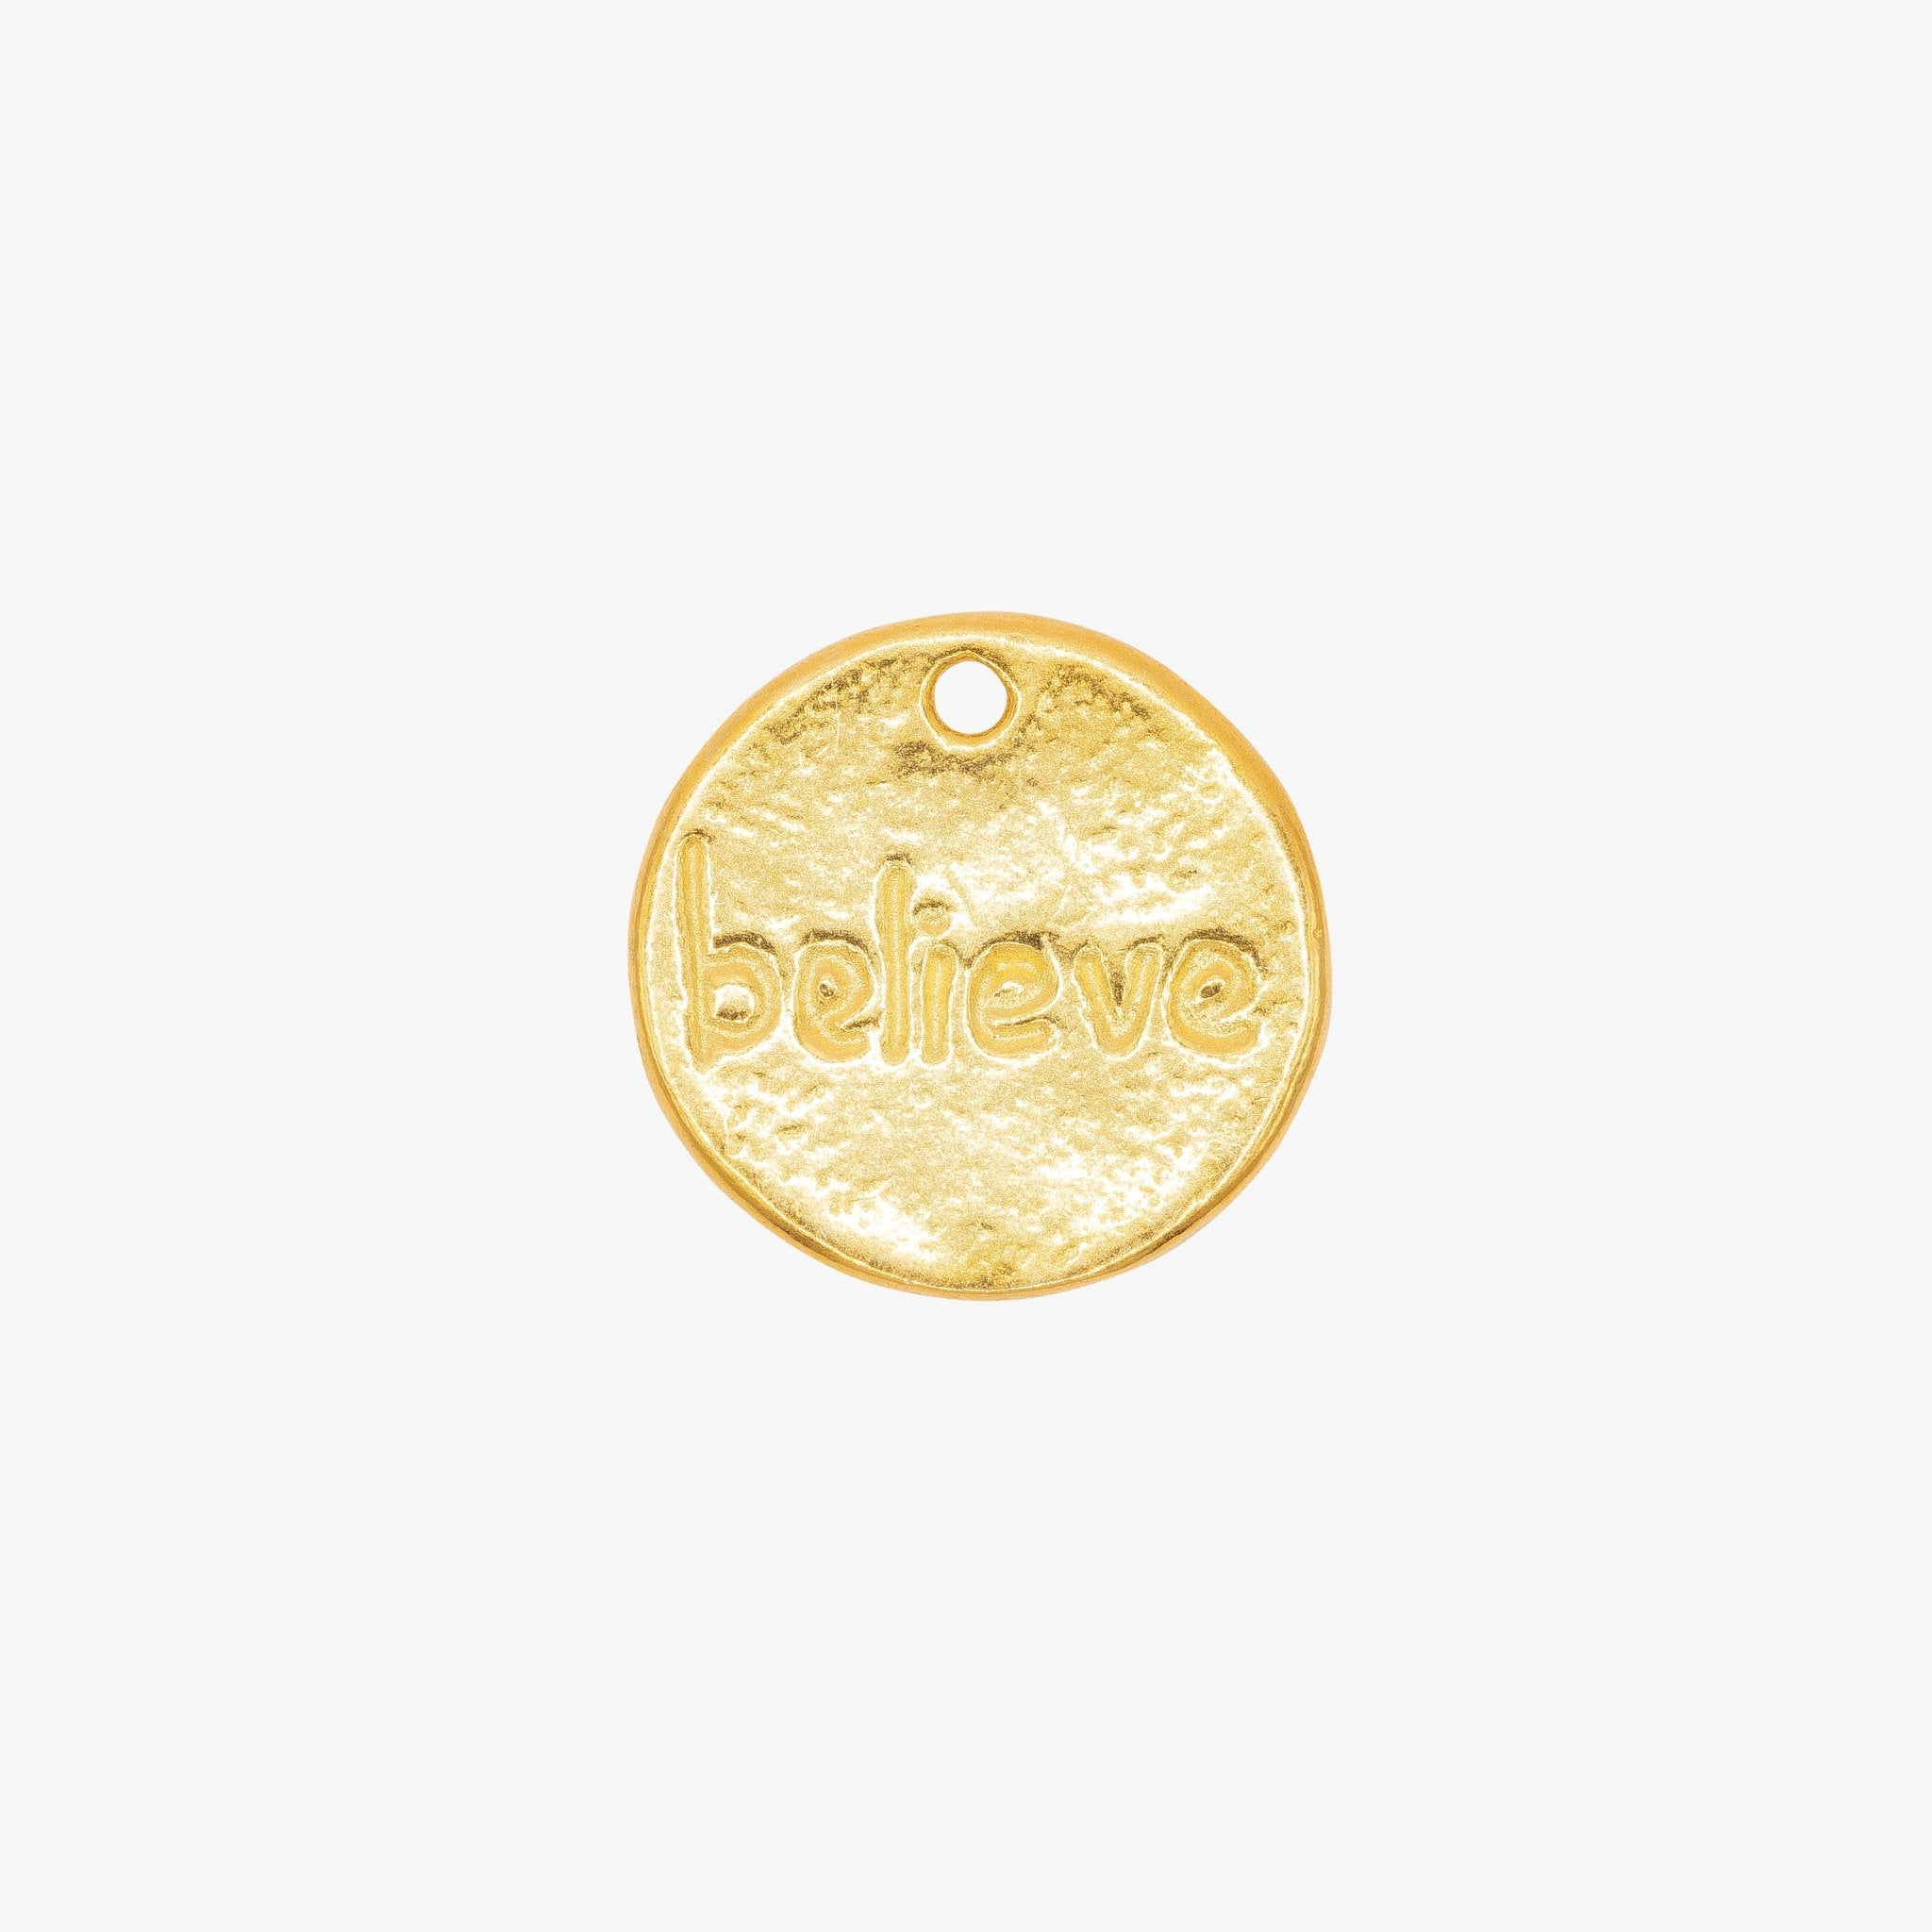 "Believe" Stamp Charm 14K Gold - GoldandWillow